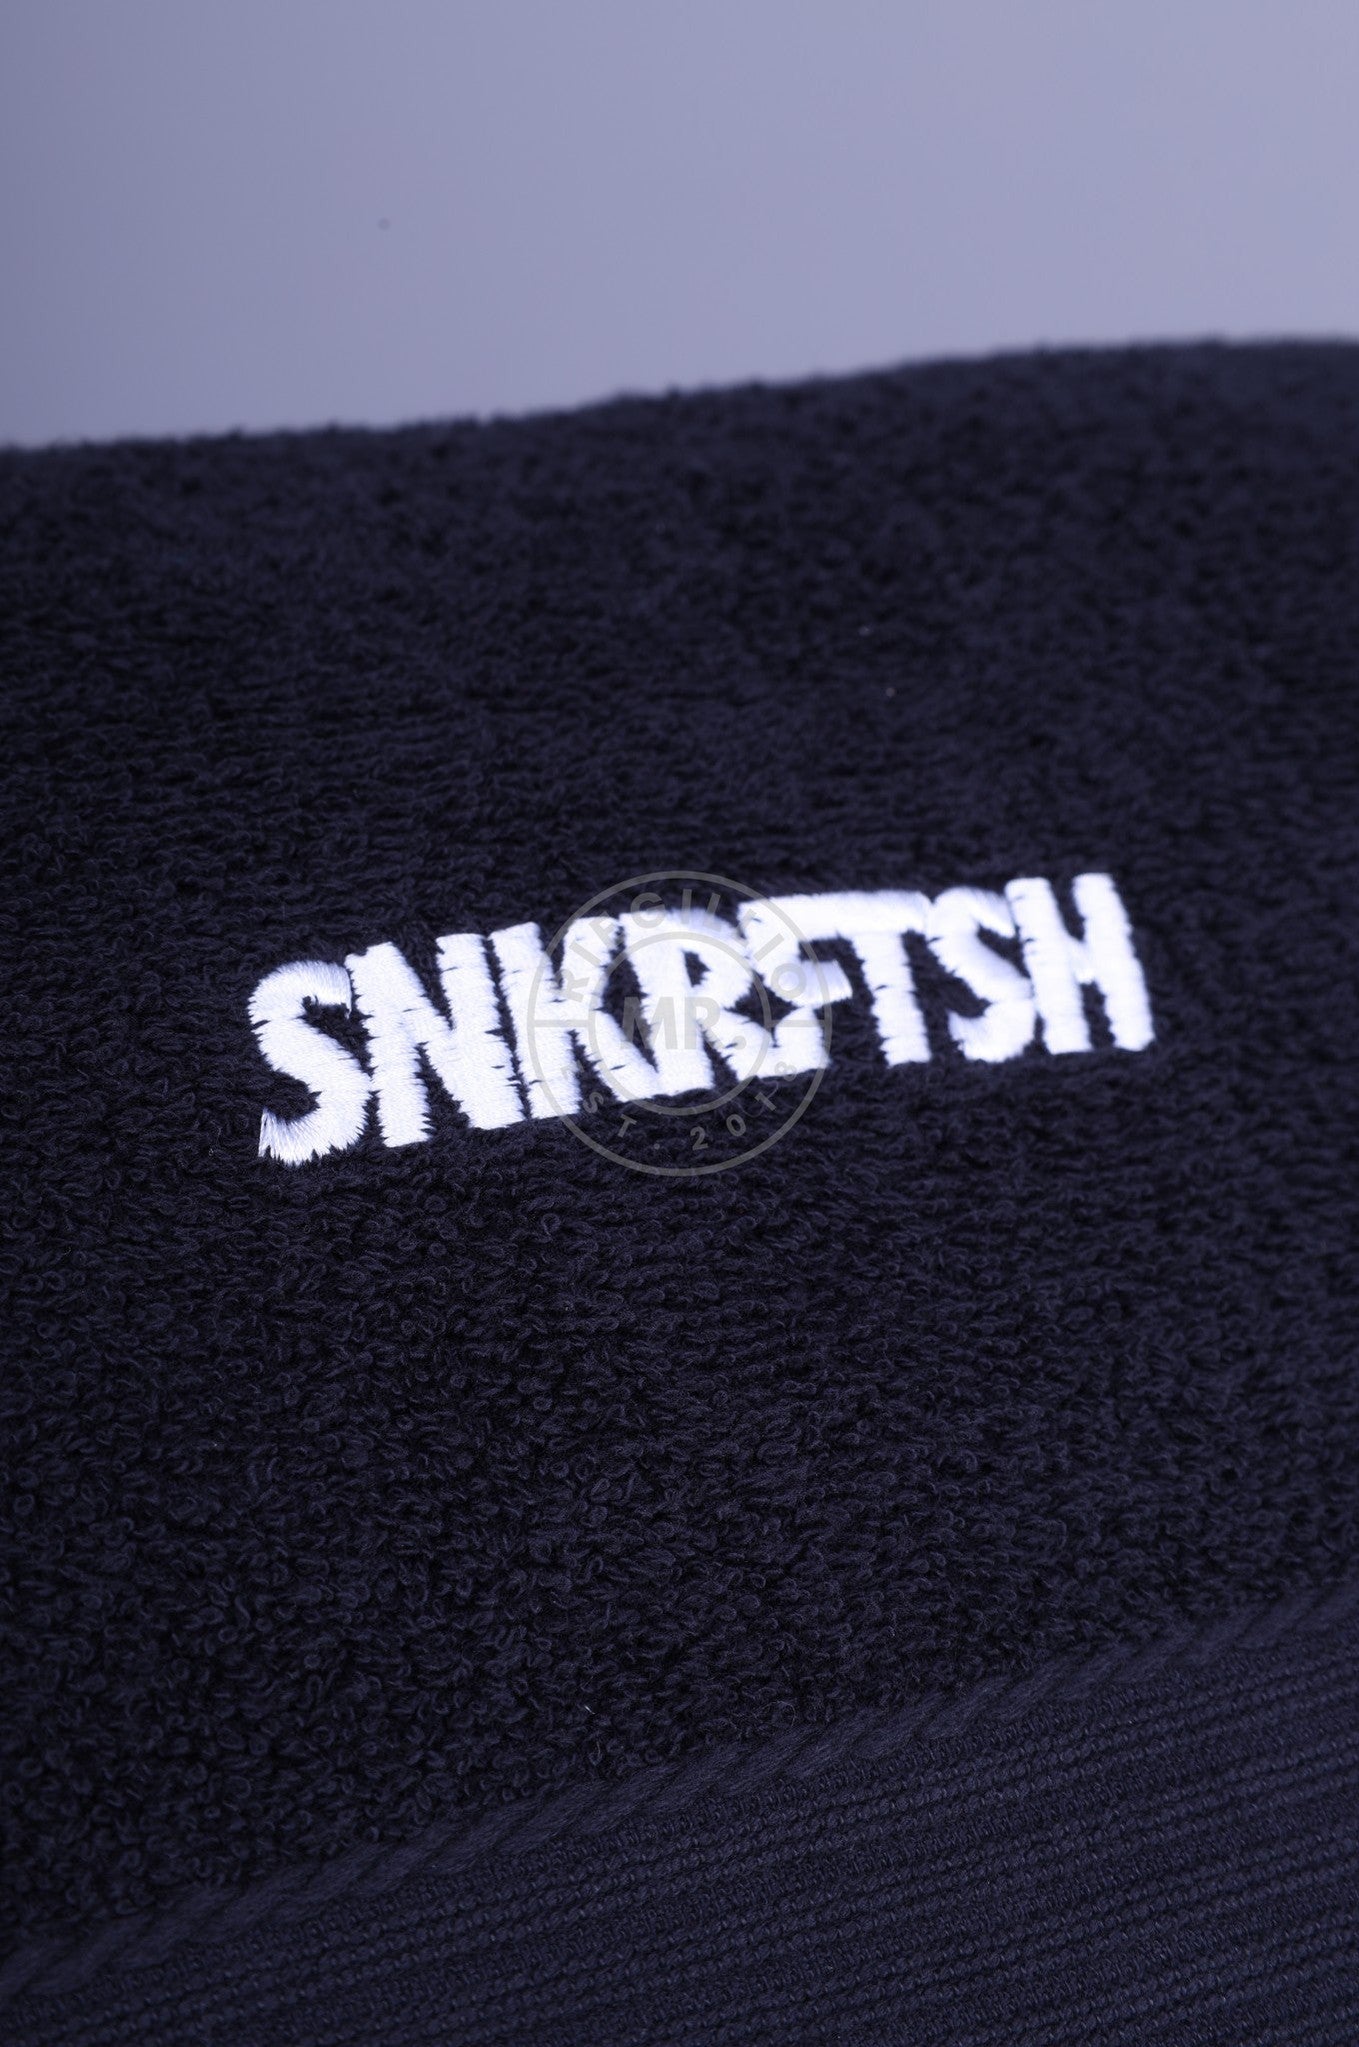 SNKRFTSH Beach Towel 180 x 100 cm at MR. Riegillio